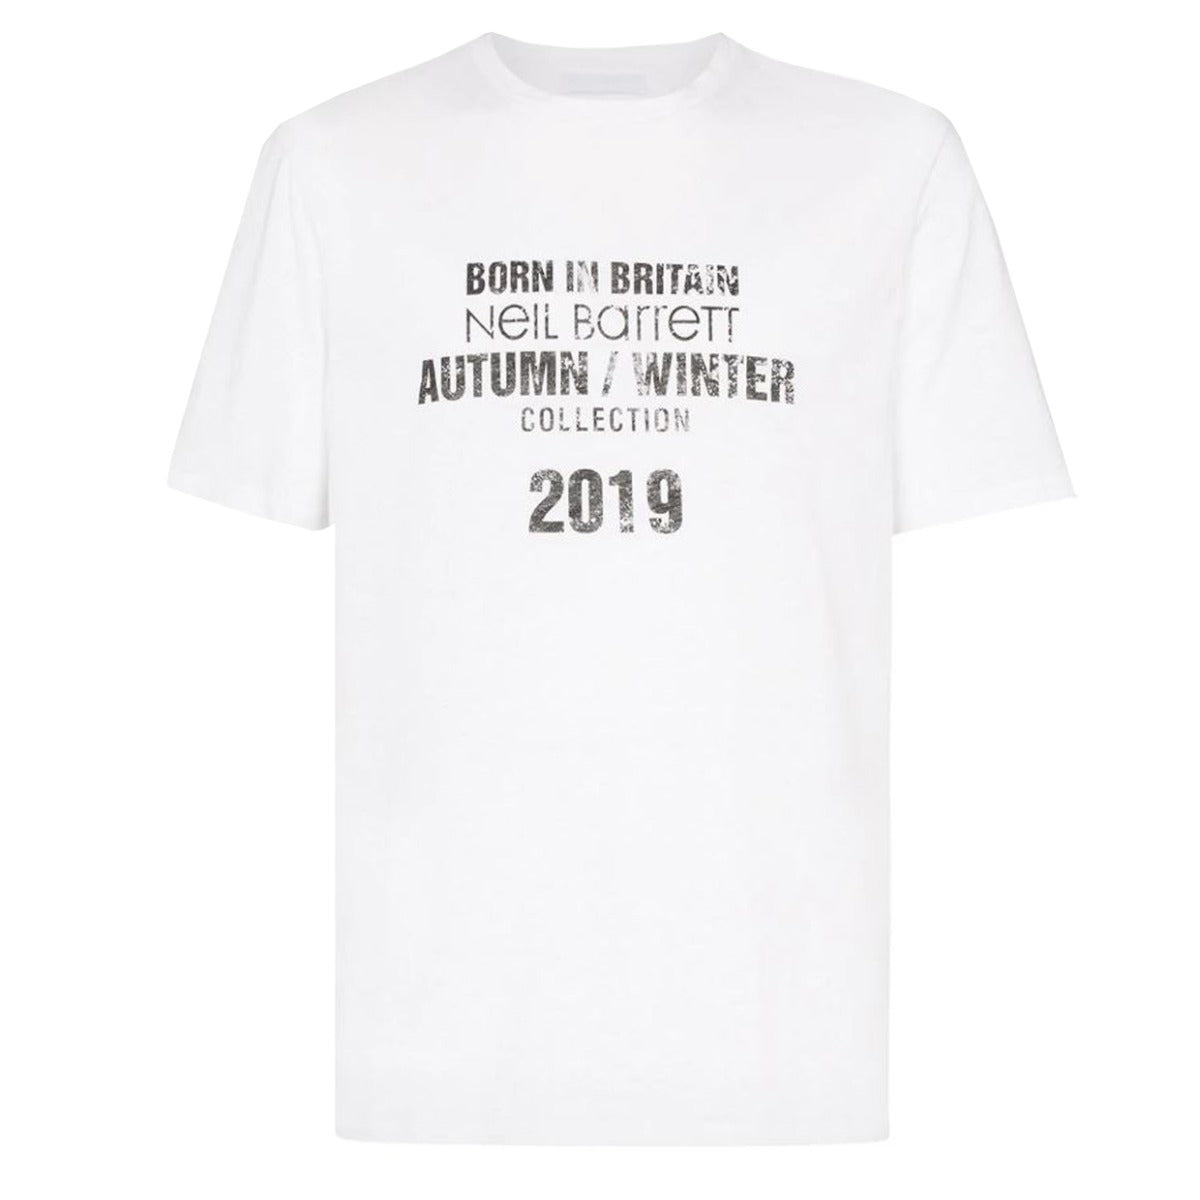 Neil Barrett White "BORN IN BRITAIN" F/W 2019 T-shirt Front 